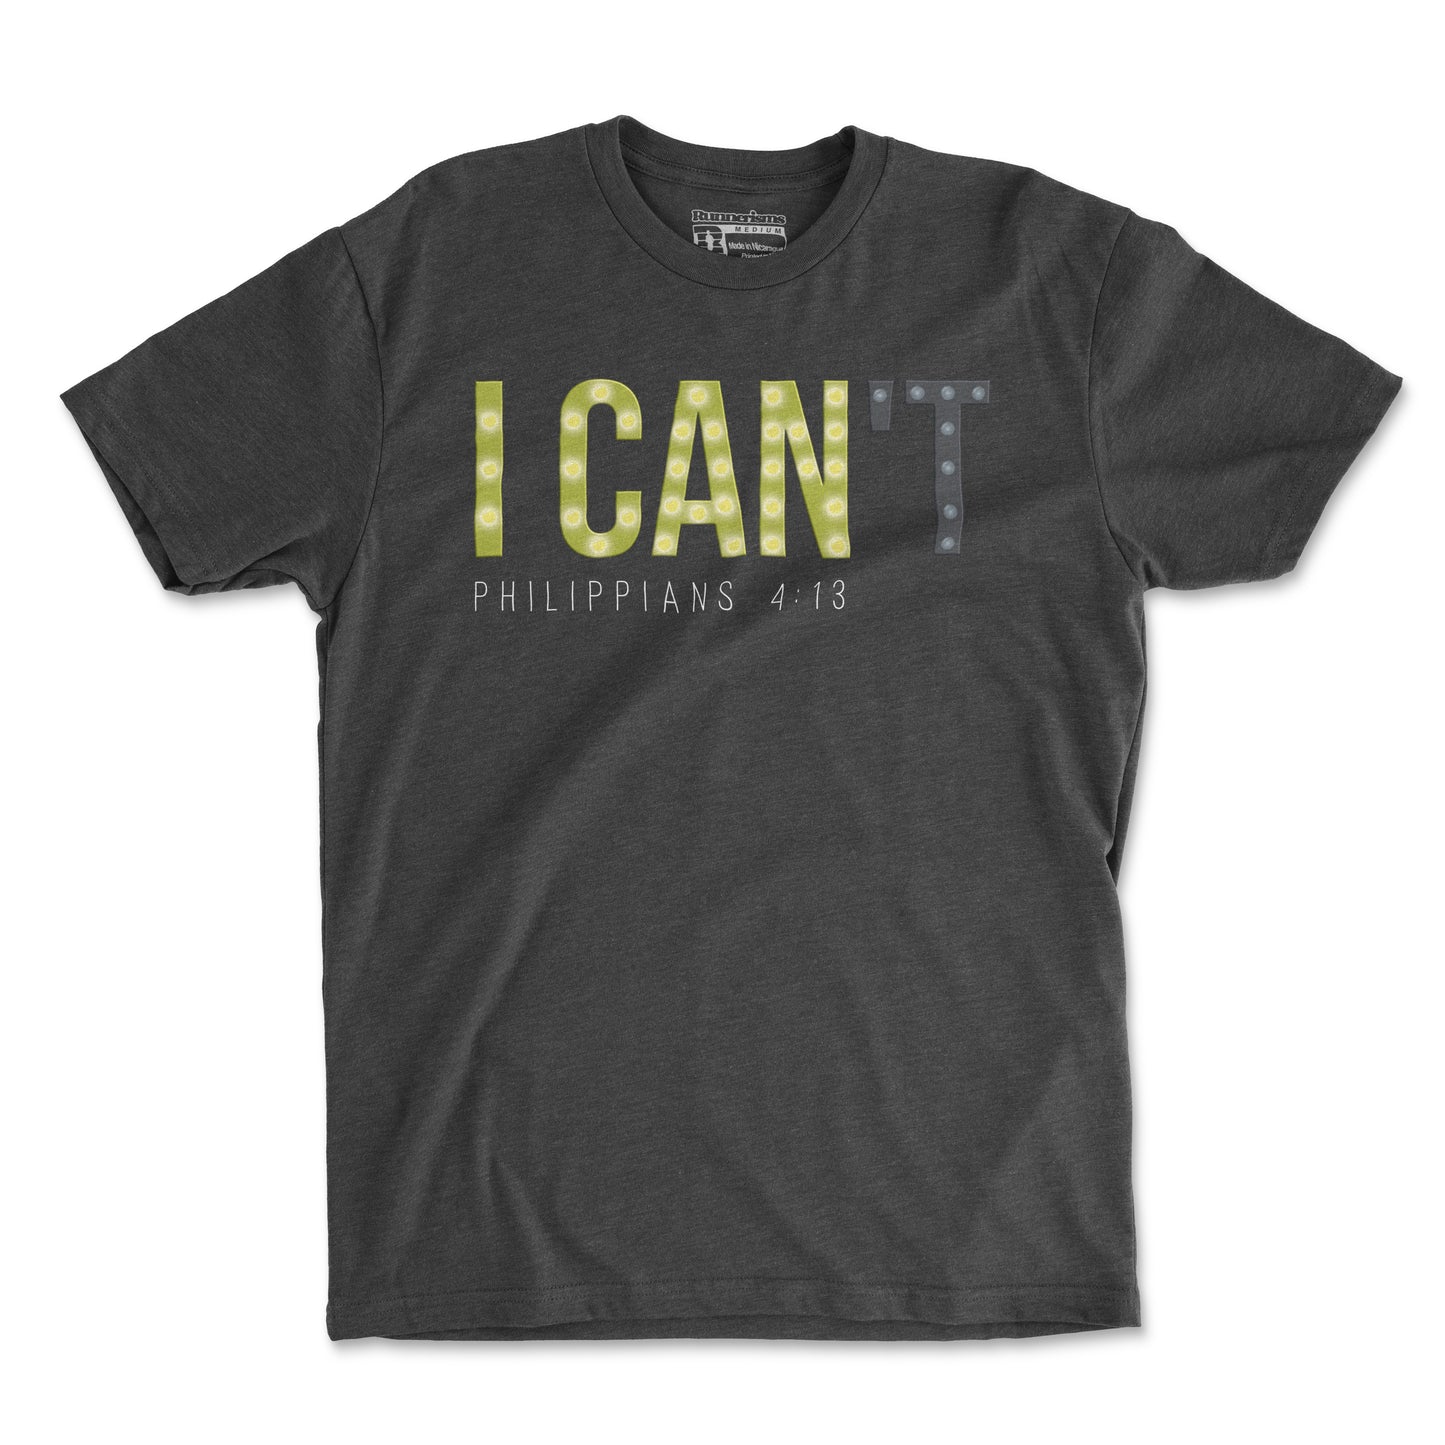 I CAN Philippians 4:13 - Unisex T Shirt